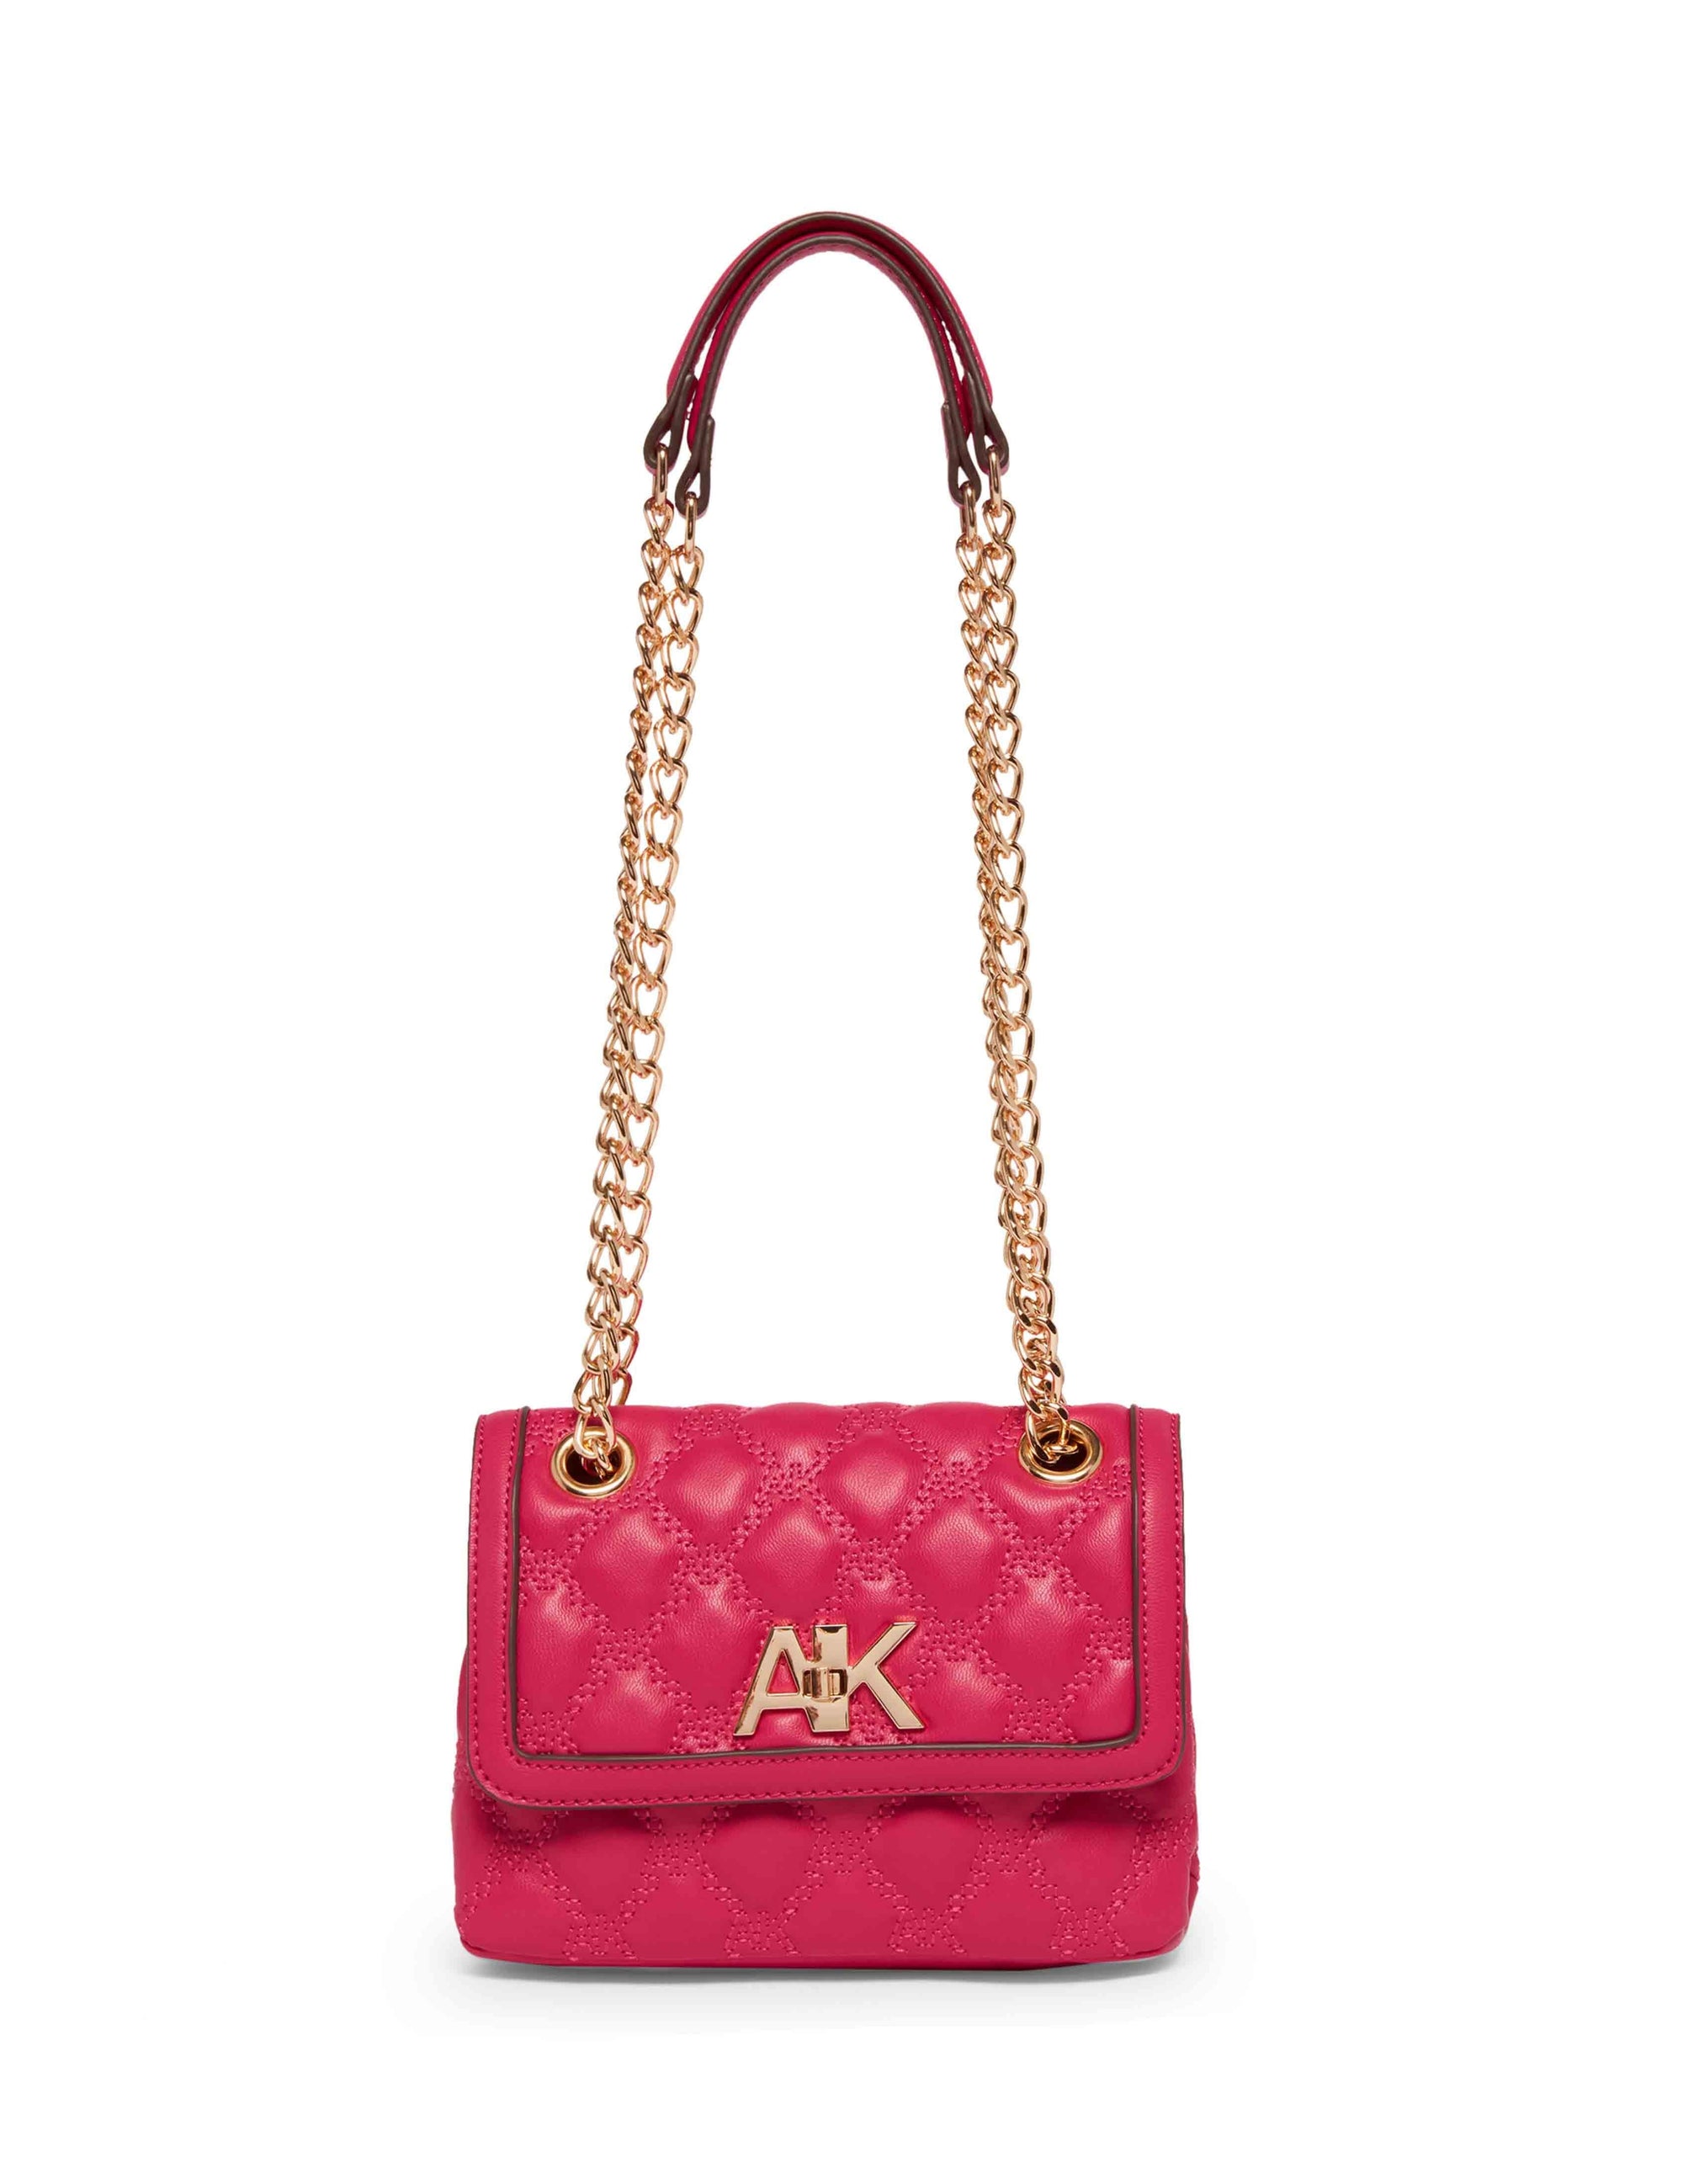 Anne Klein Hibiscus pink Quilted AK Shoulder Bag